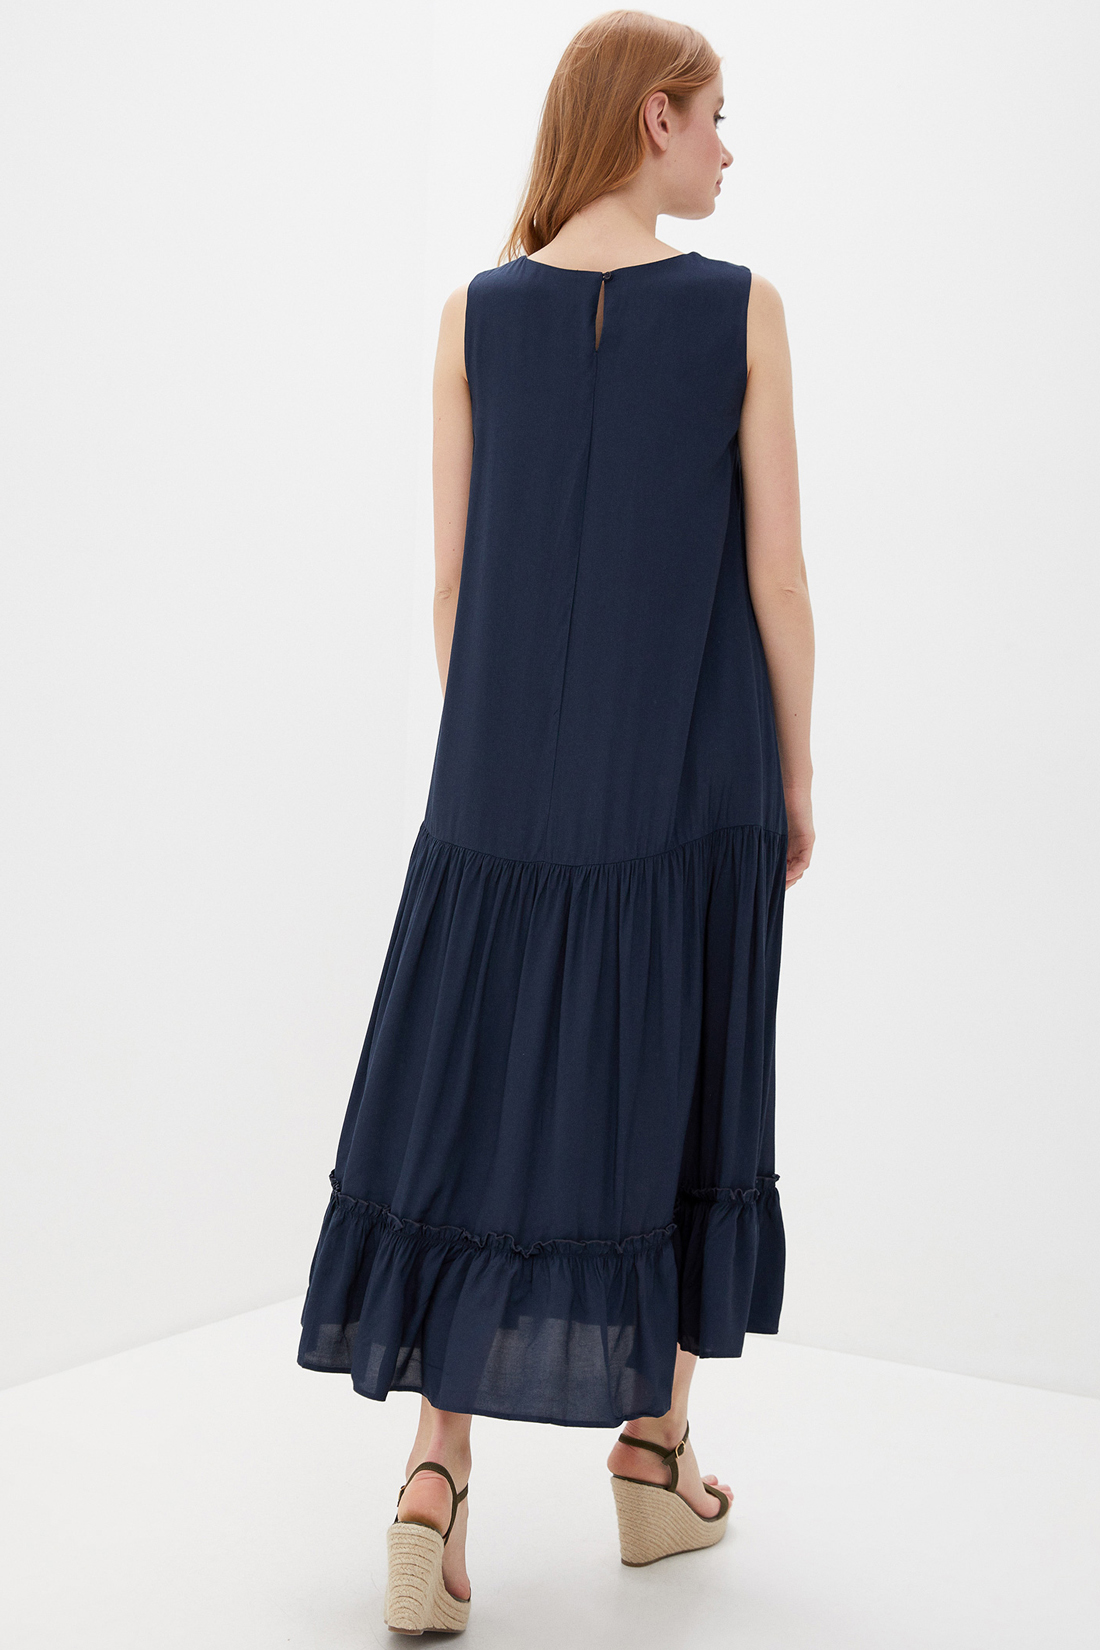 Платье (арт. baon B450094), размер M, цвет синий Платье (арт. baon B450094) - фото 2